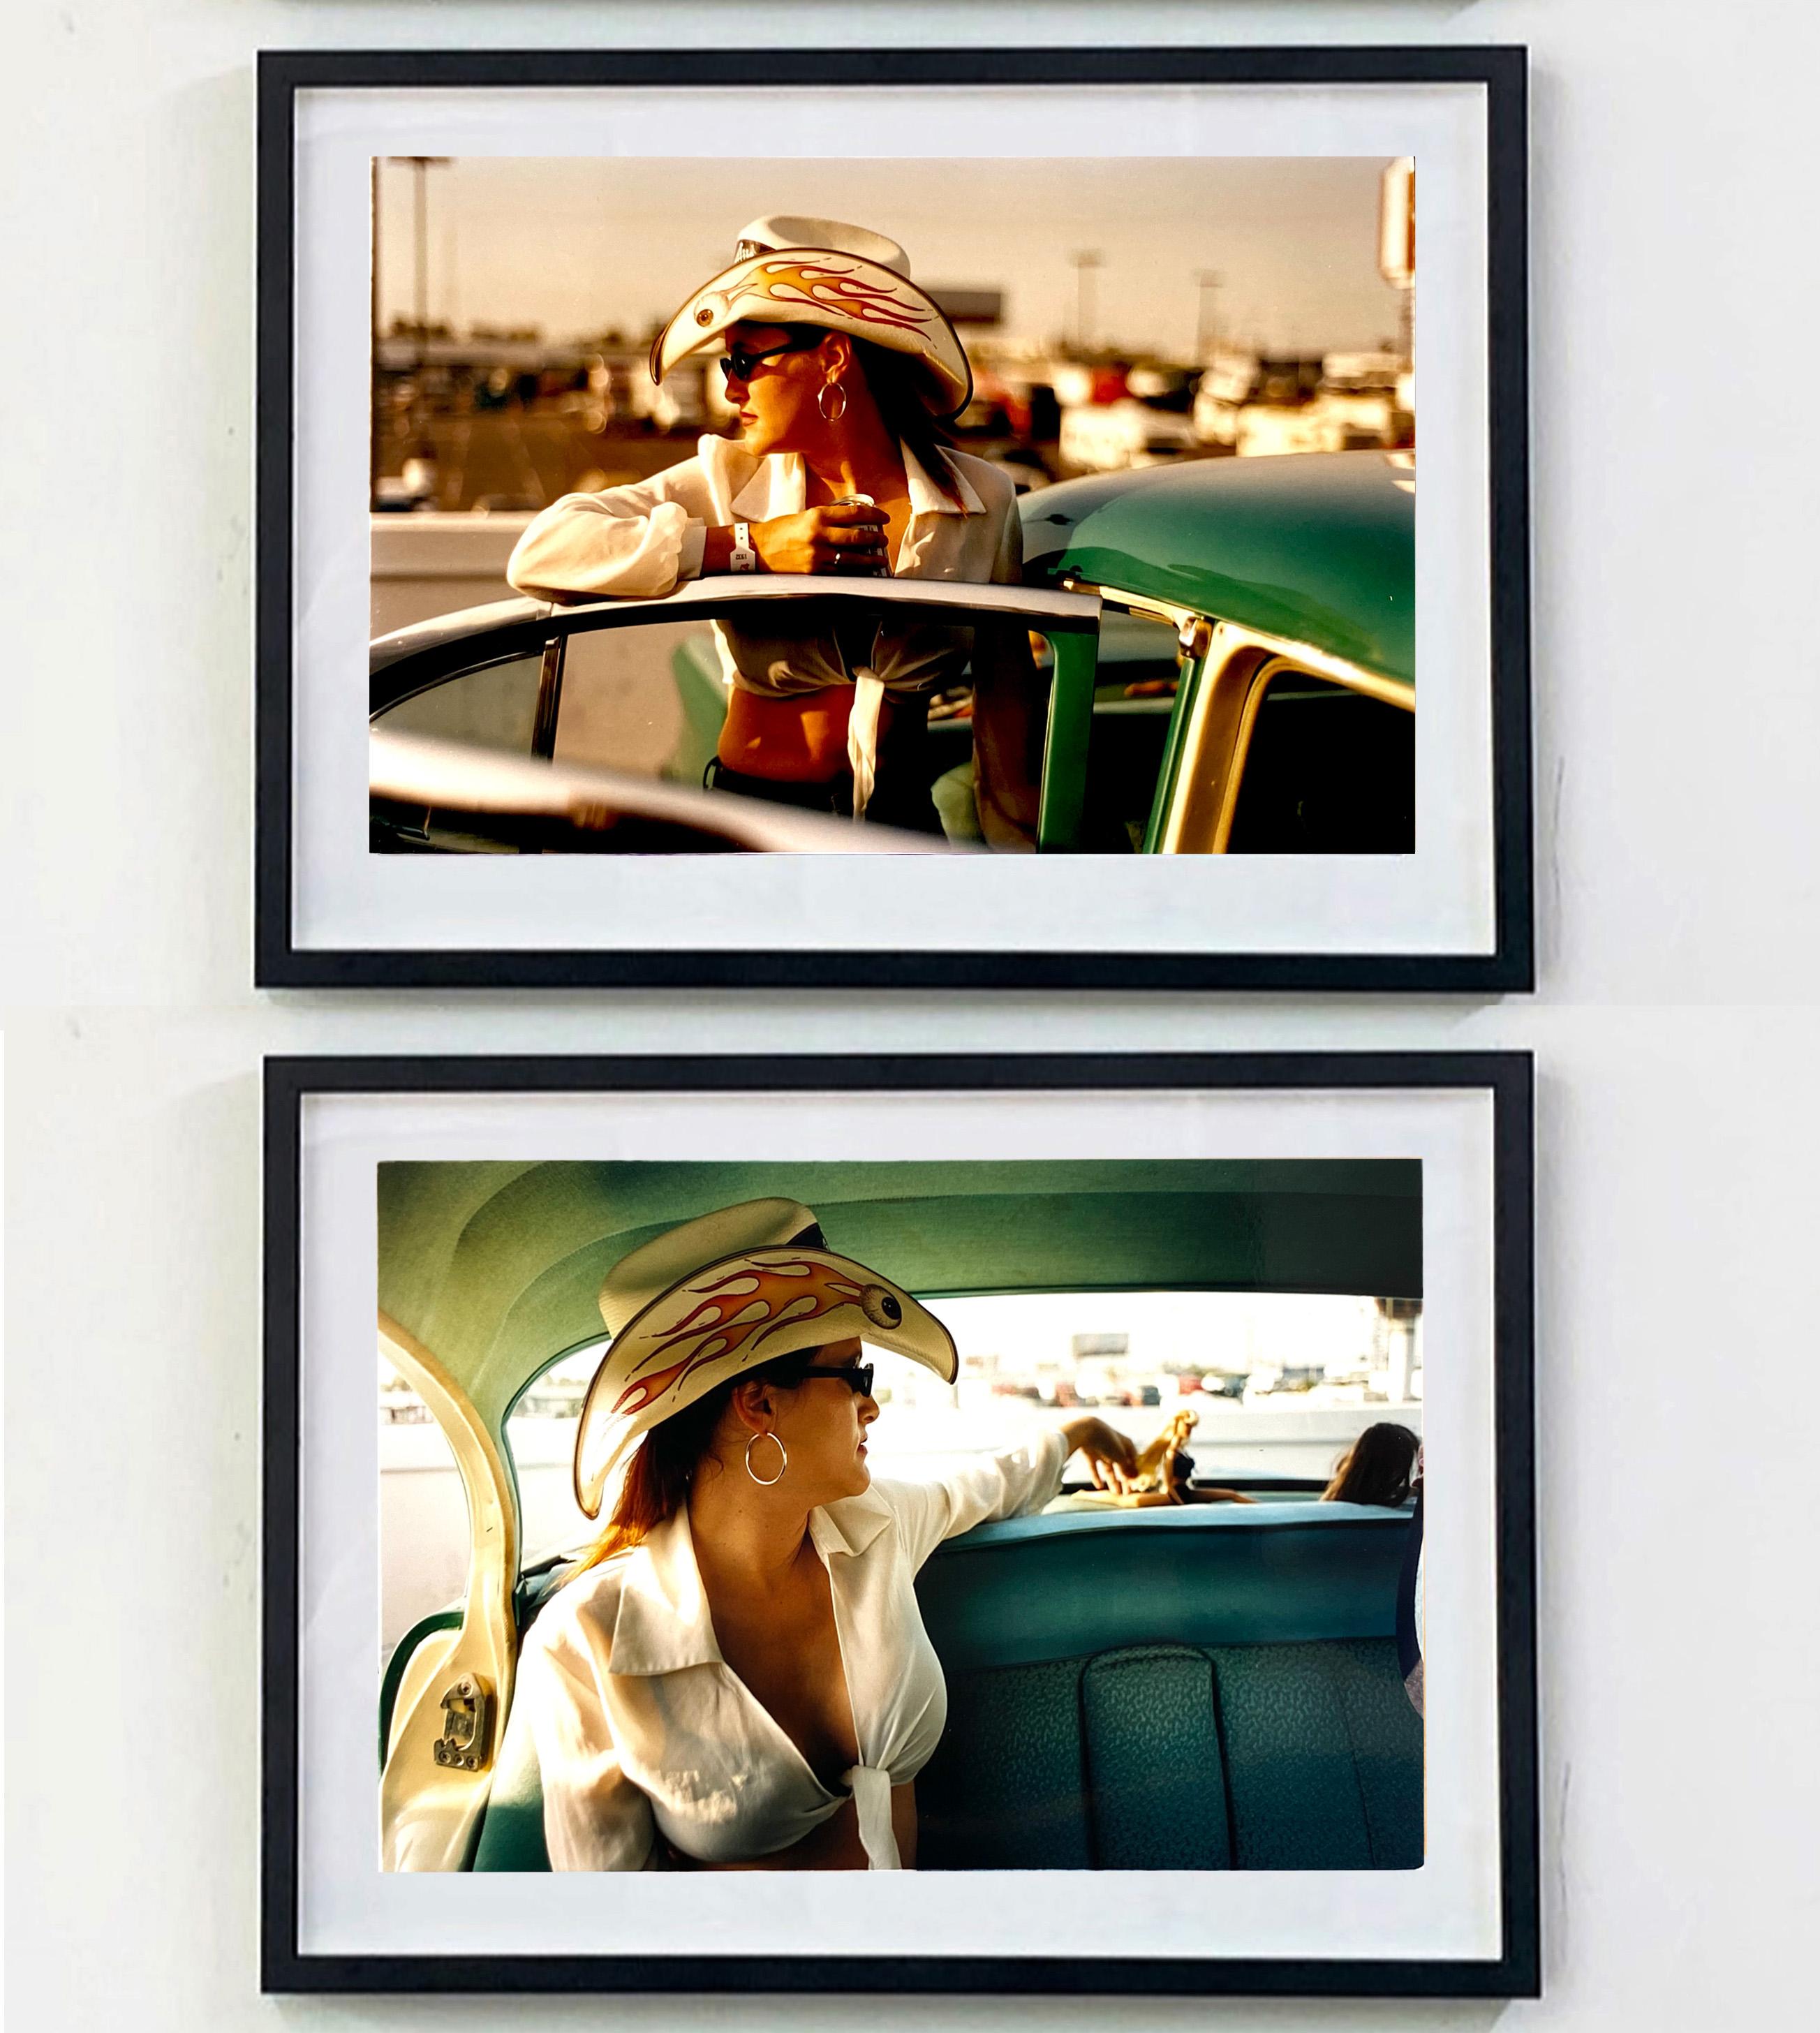 Wendy and Dolls, Las Vegas - Contemporary Portrait Color Photography For Sale 2